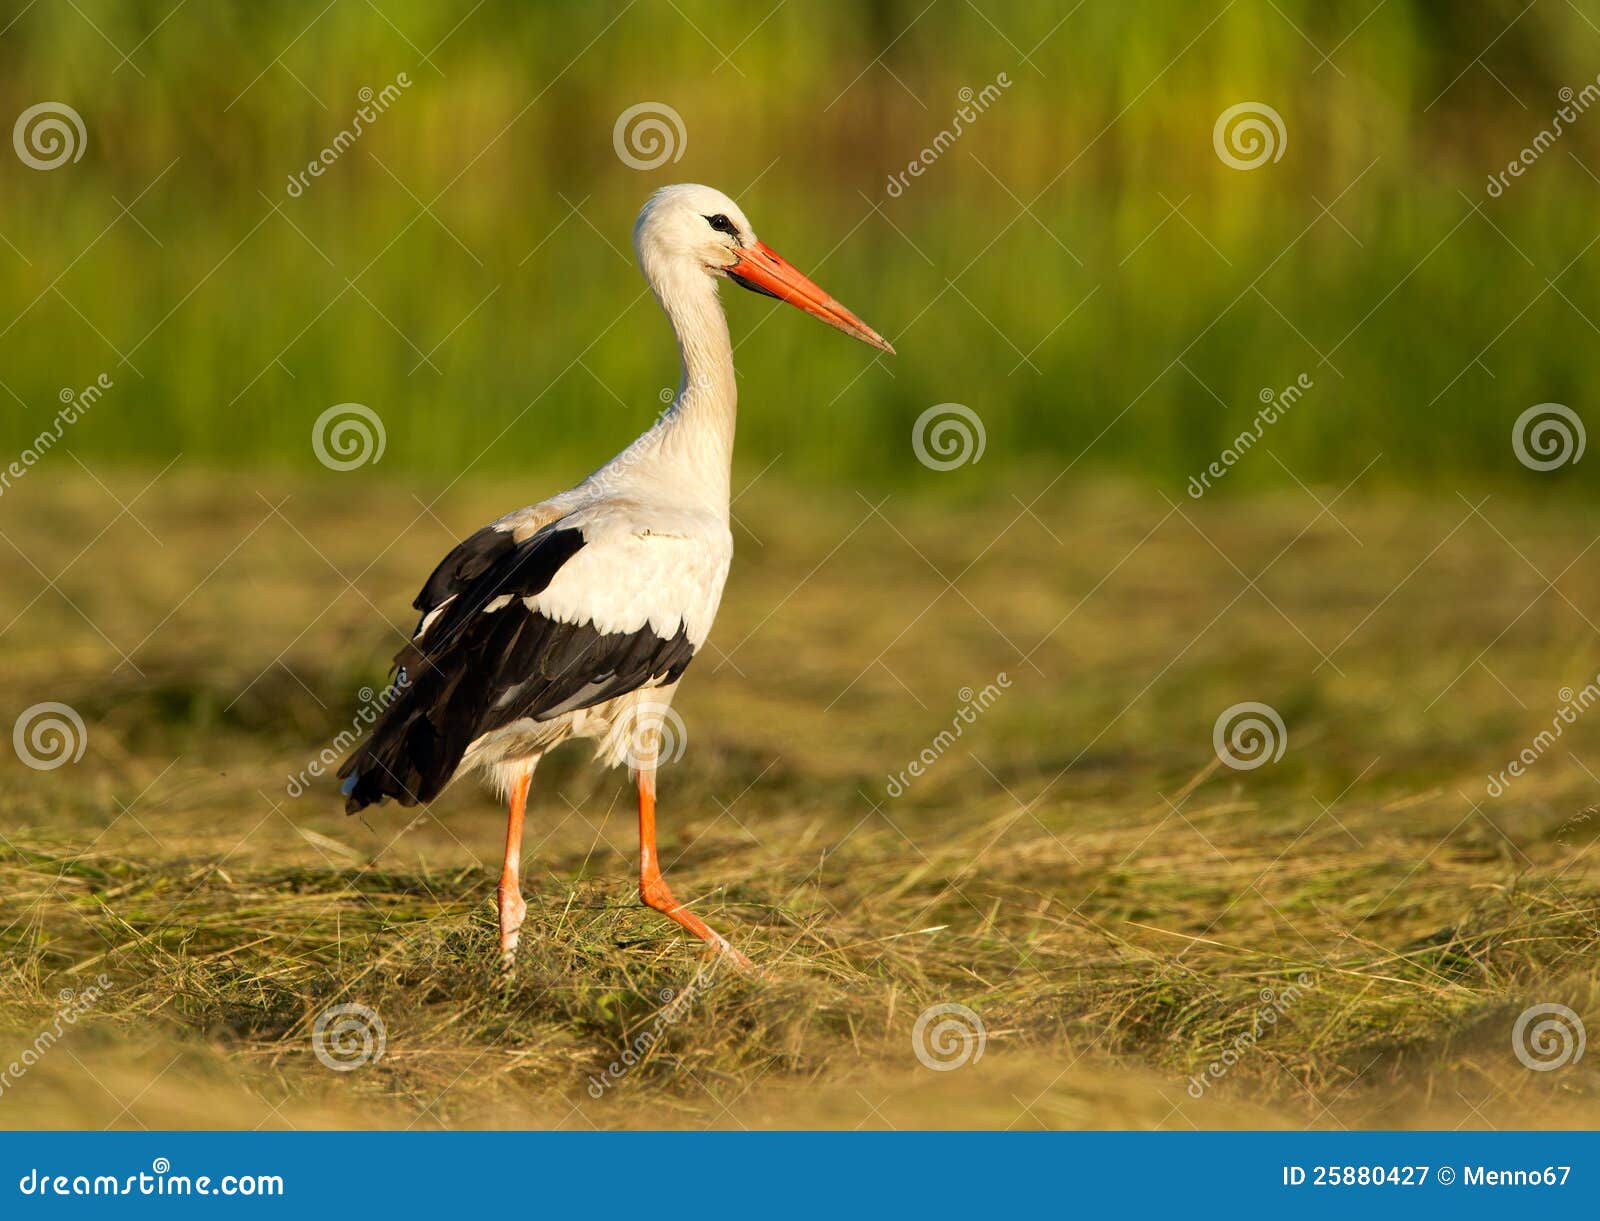 Stork in the grass. Stork standing in green grass